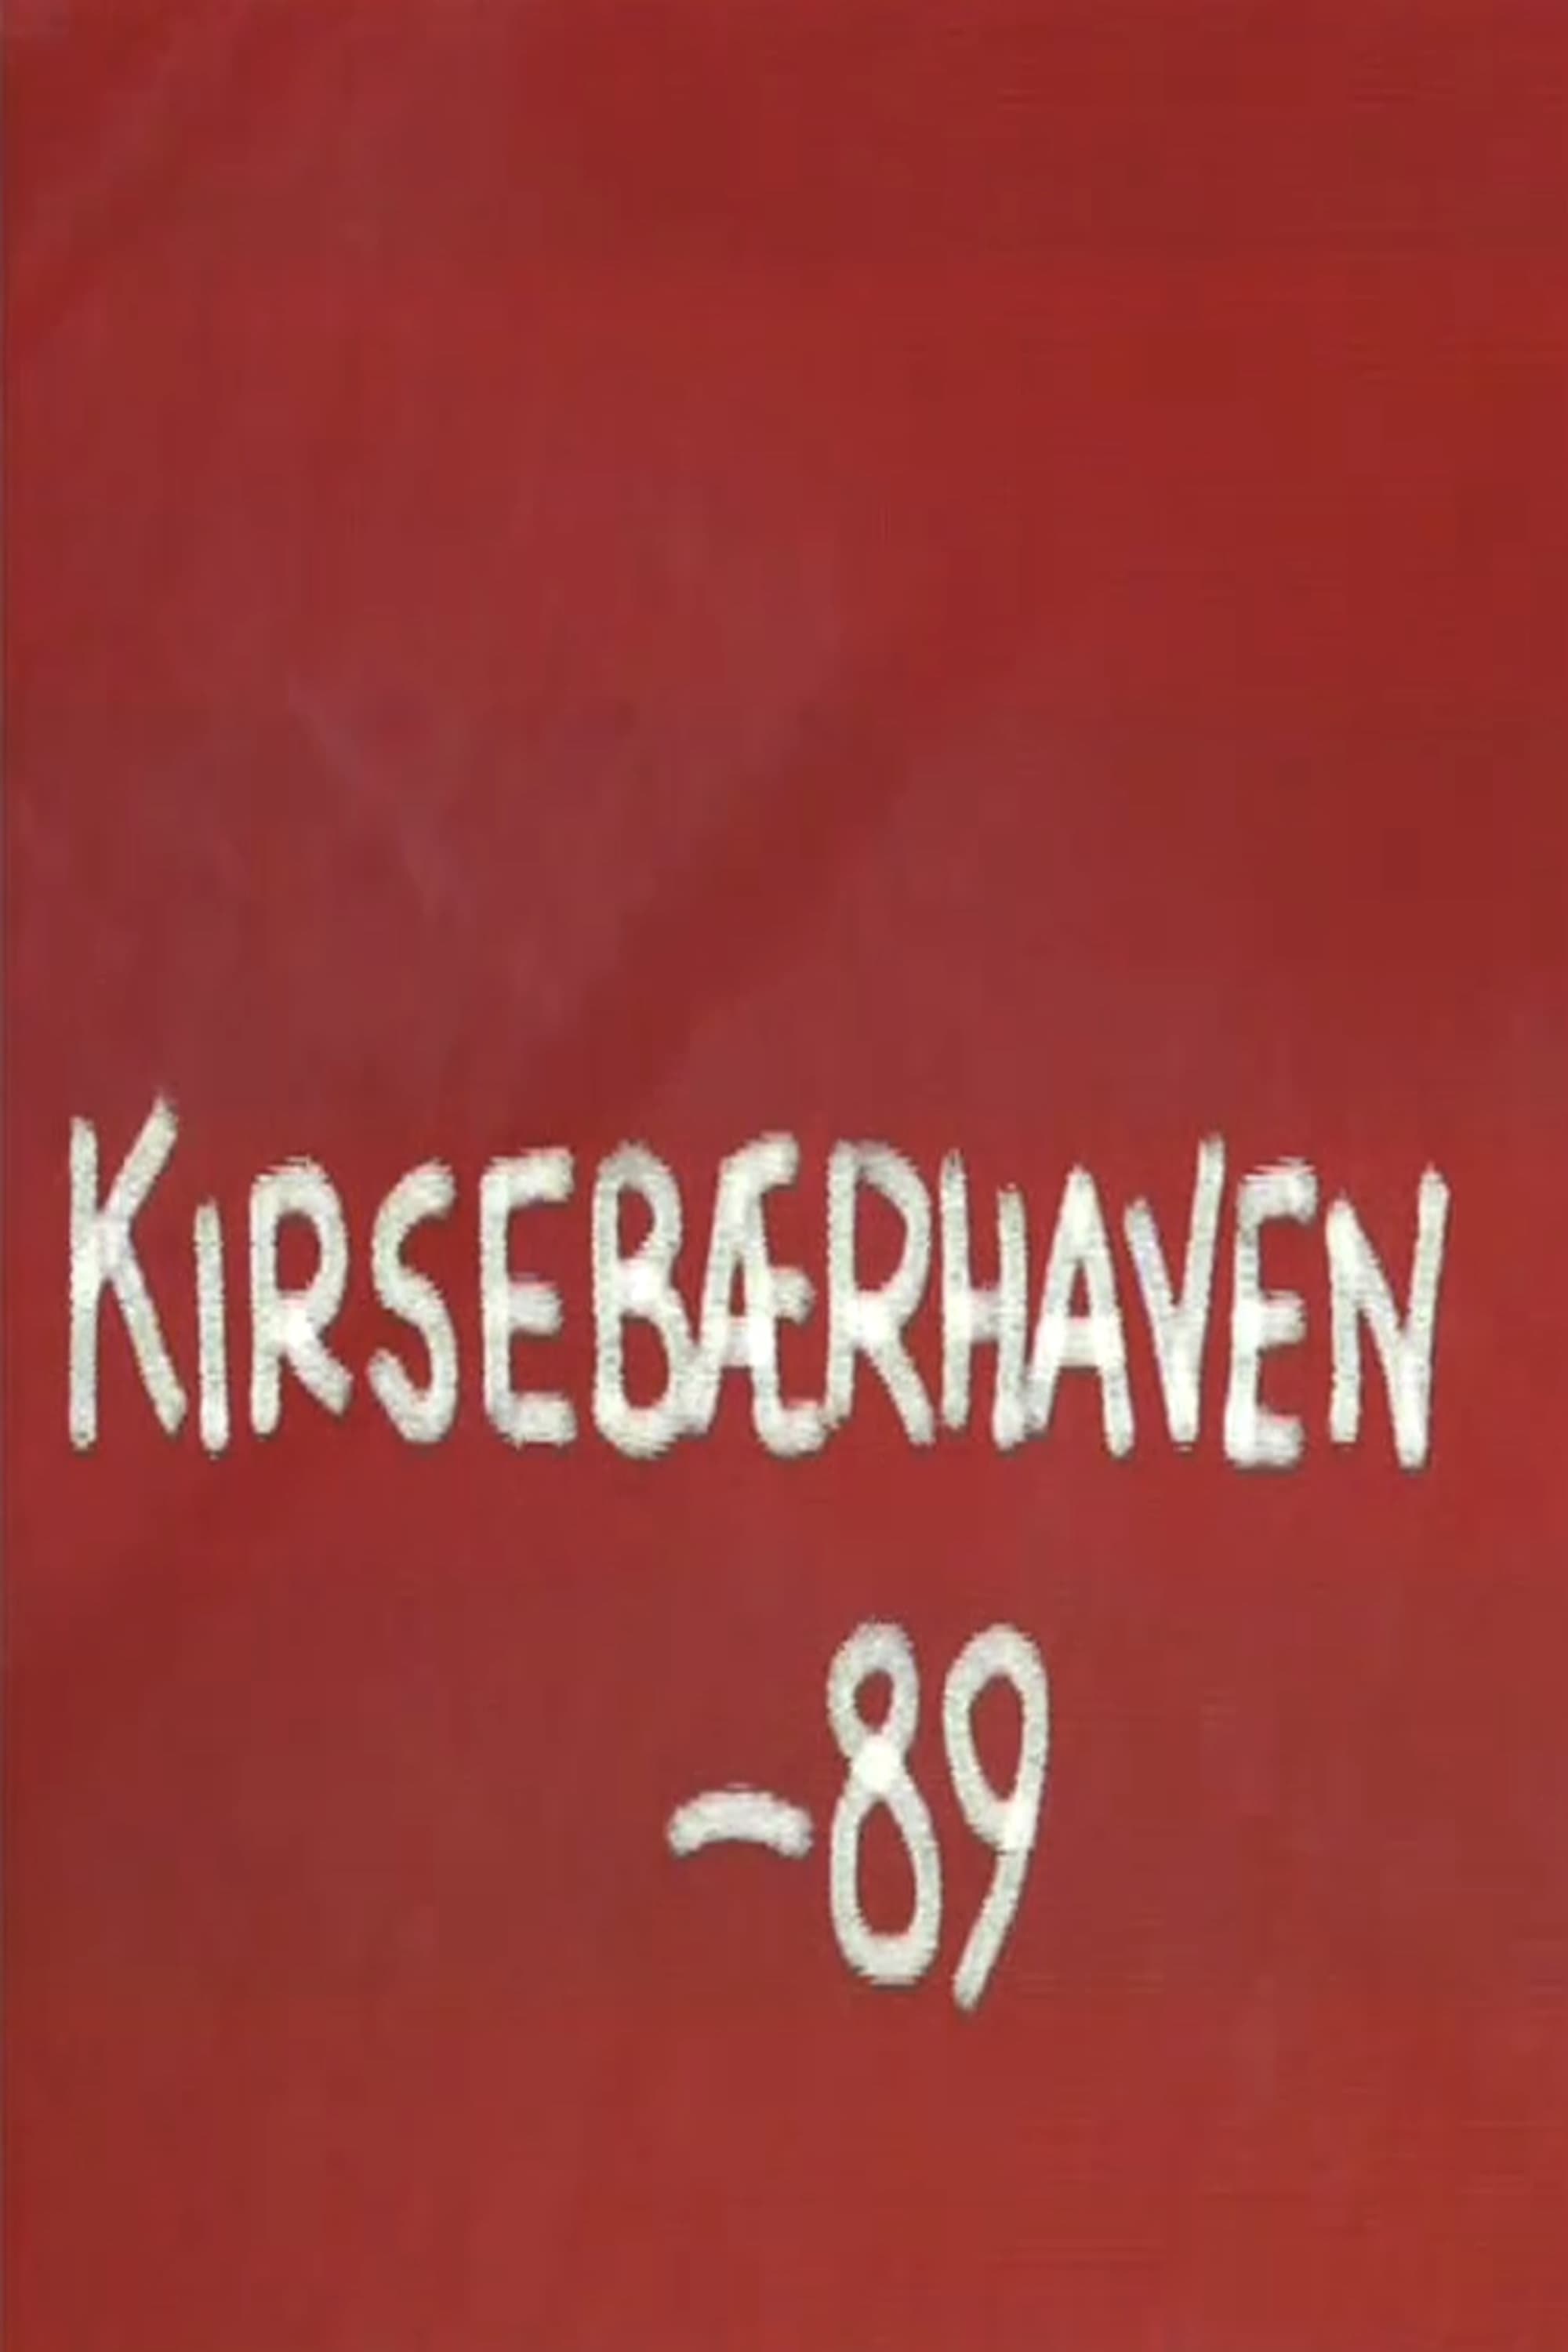 Kirsebærhaven 89